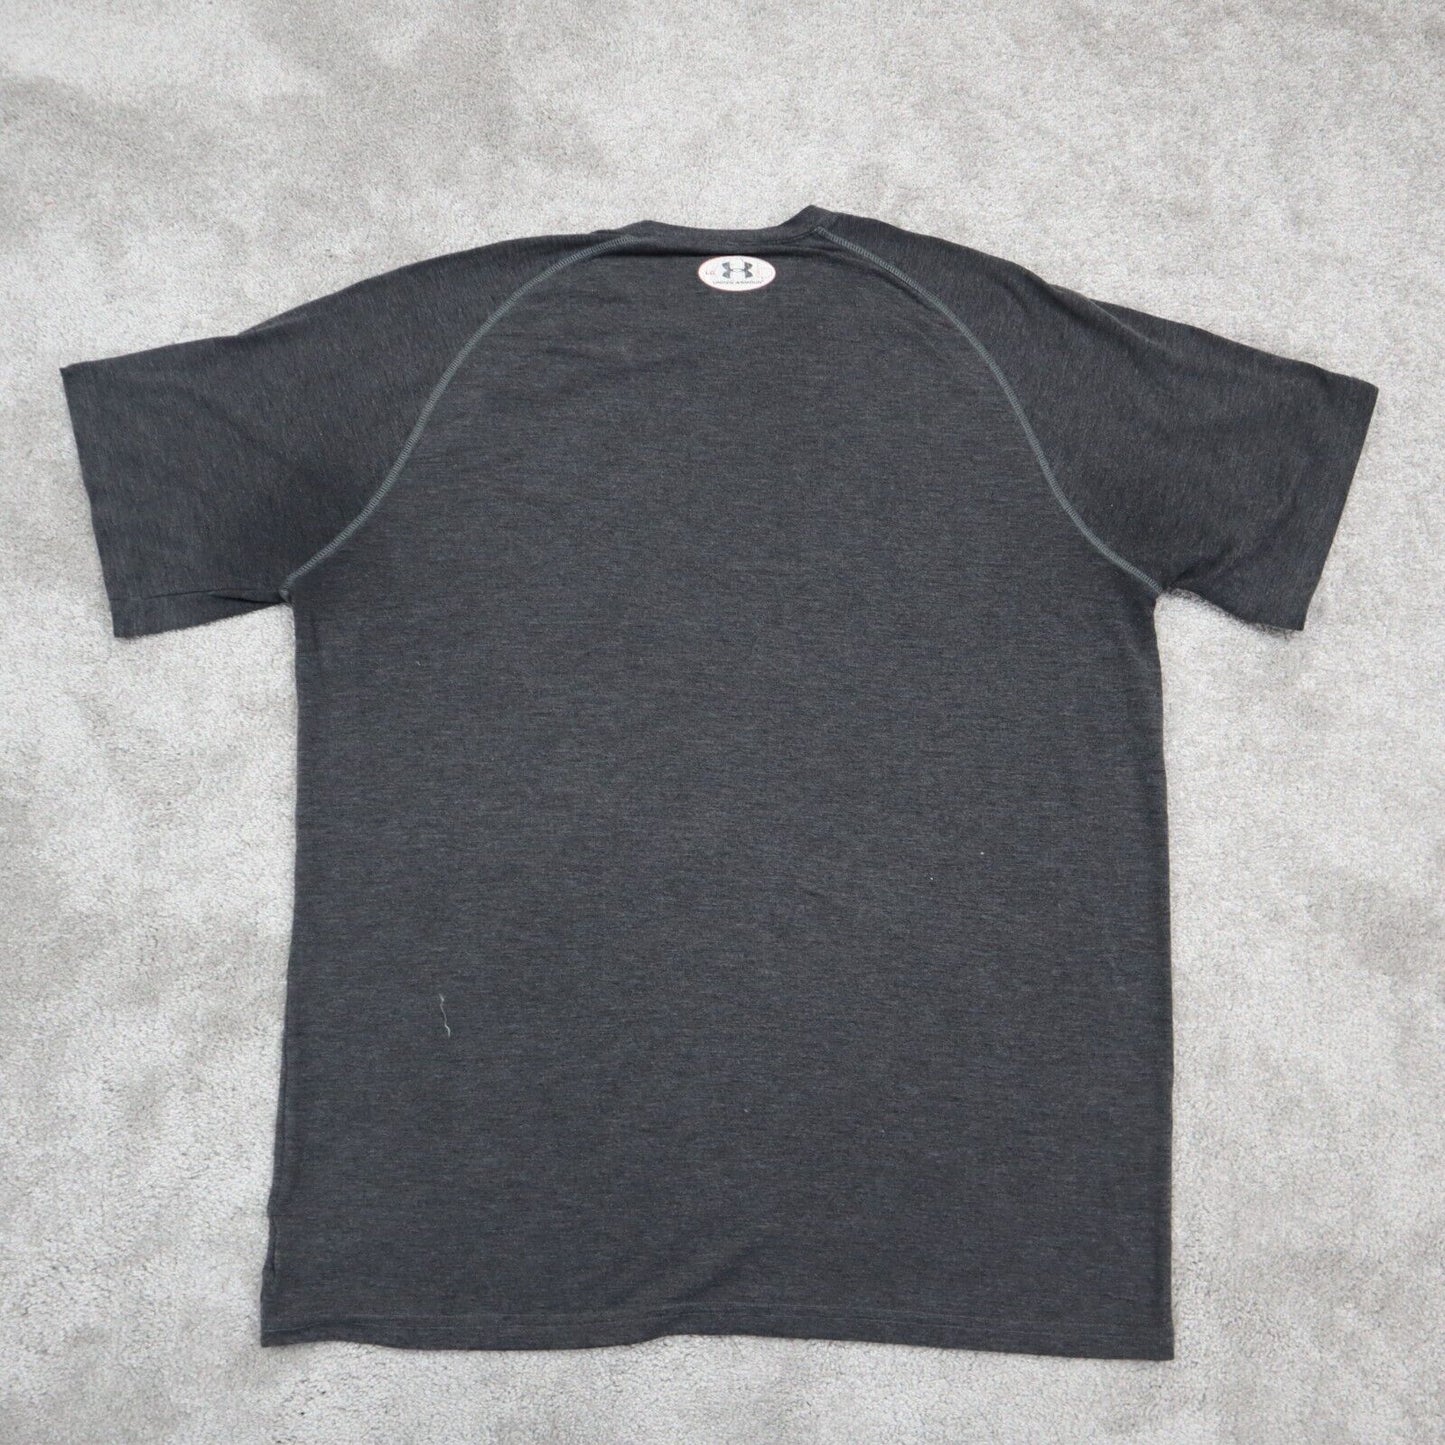 Under Armour Sports T-Shirt Men's Large L Charcoal Gray Short Sleeves Heatgear